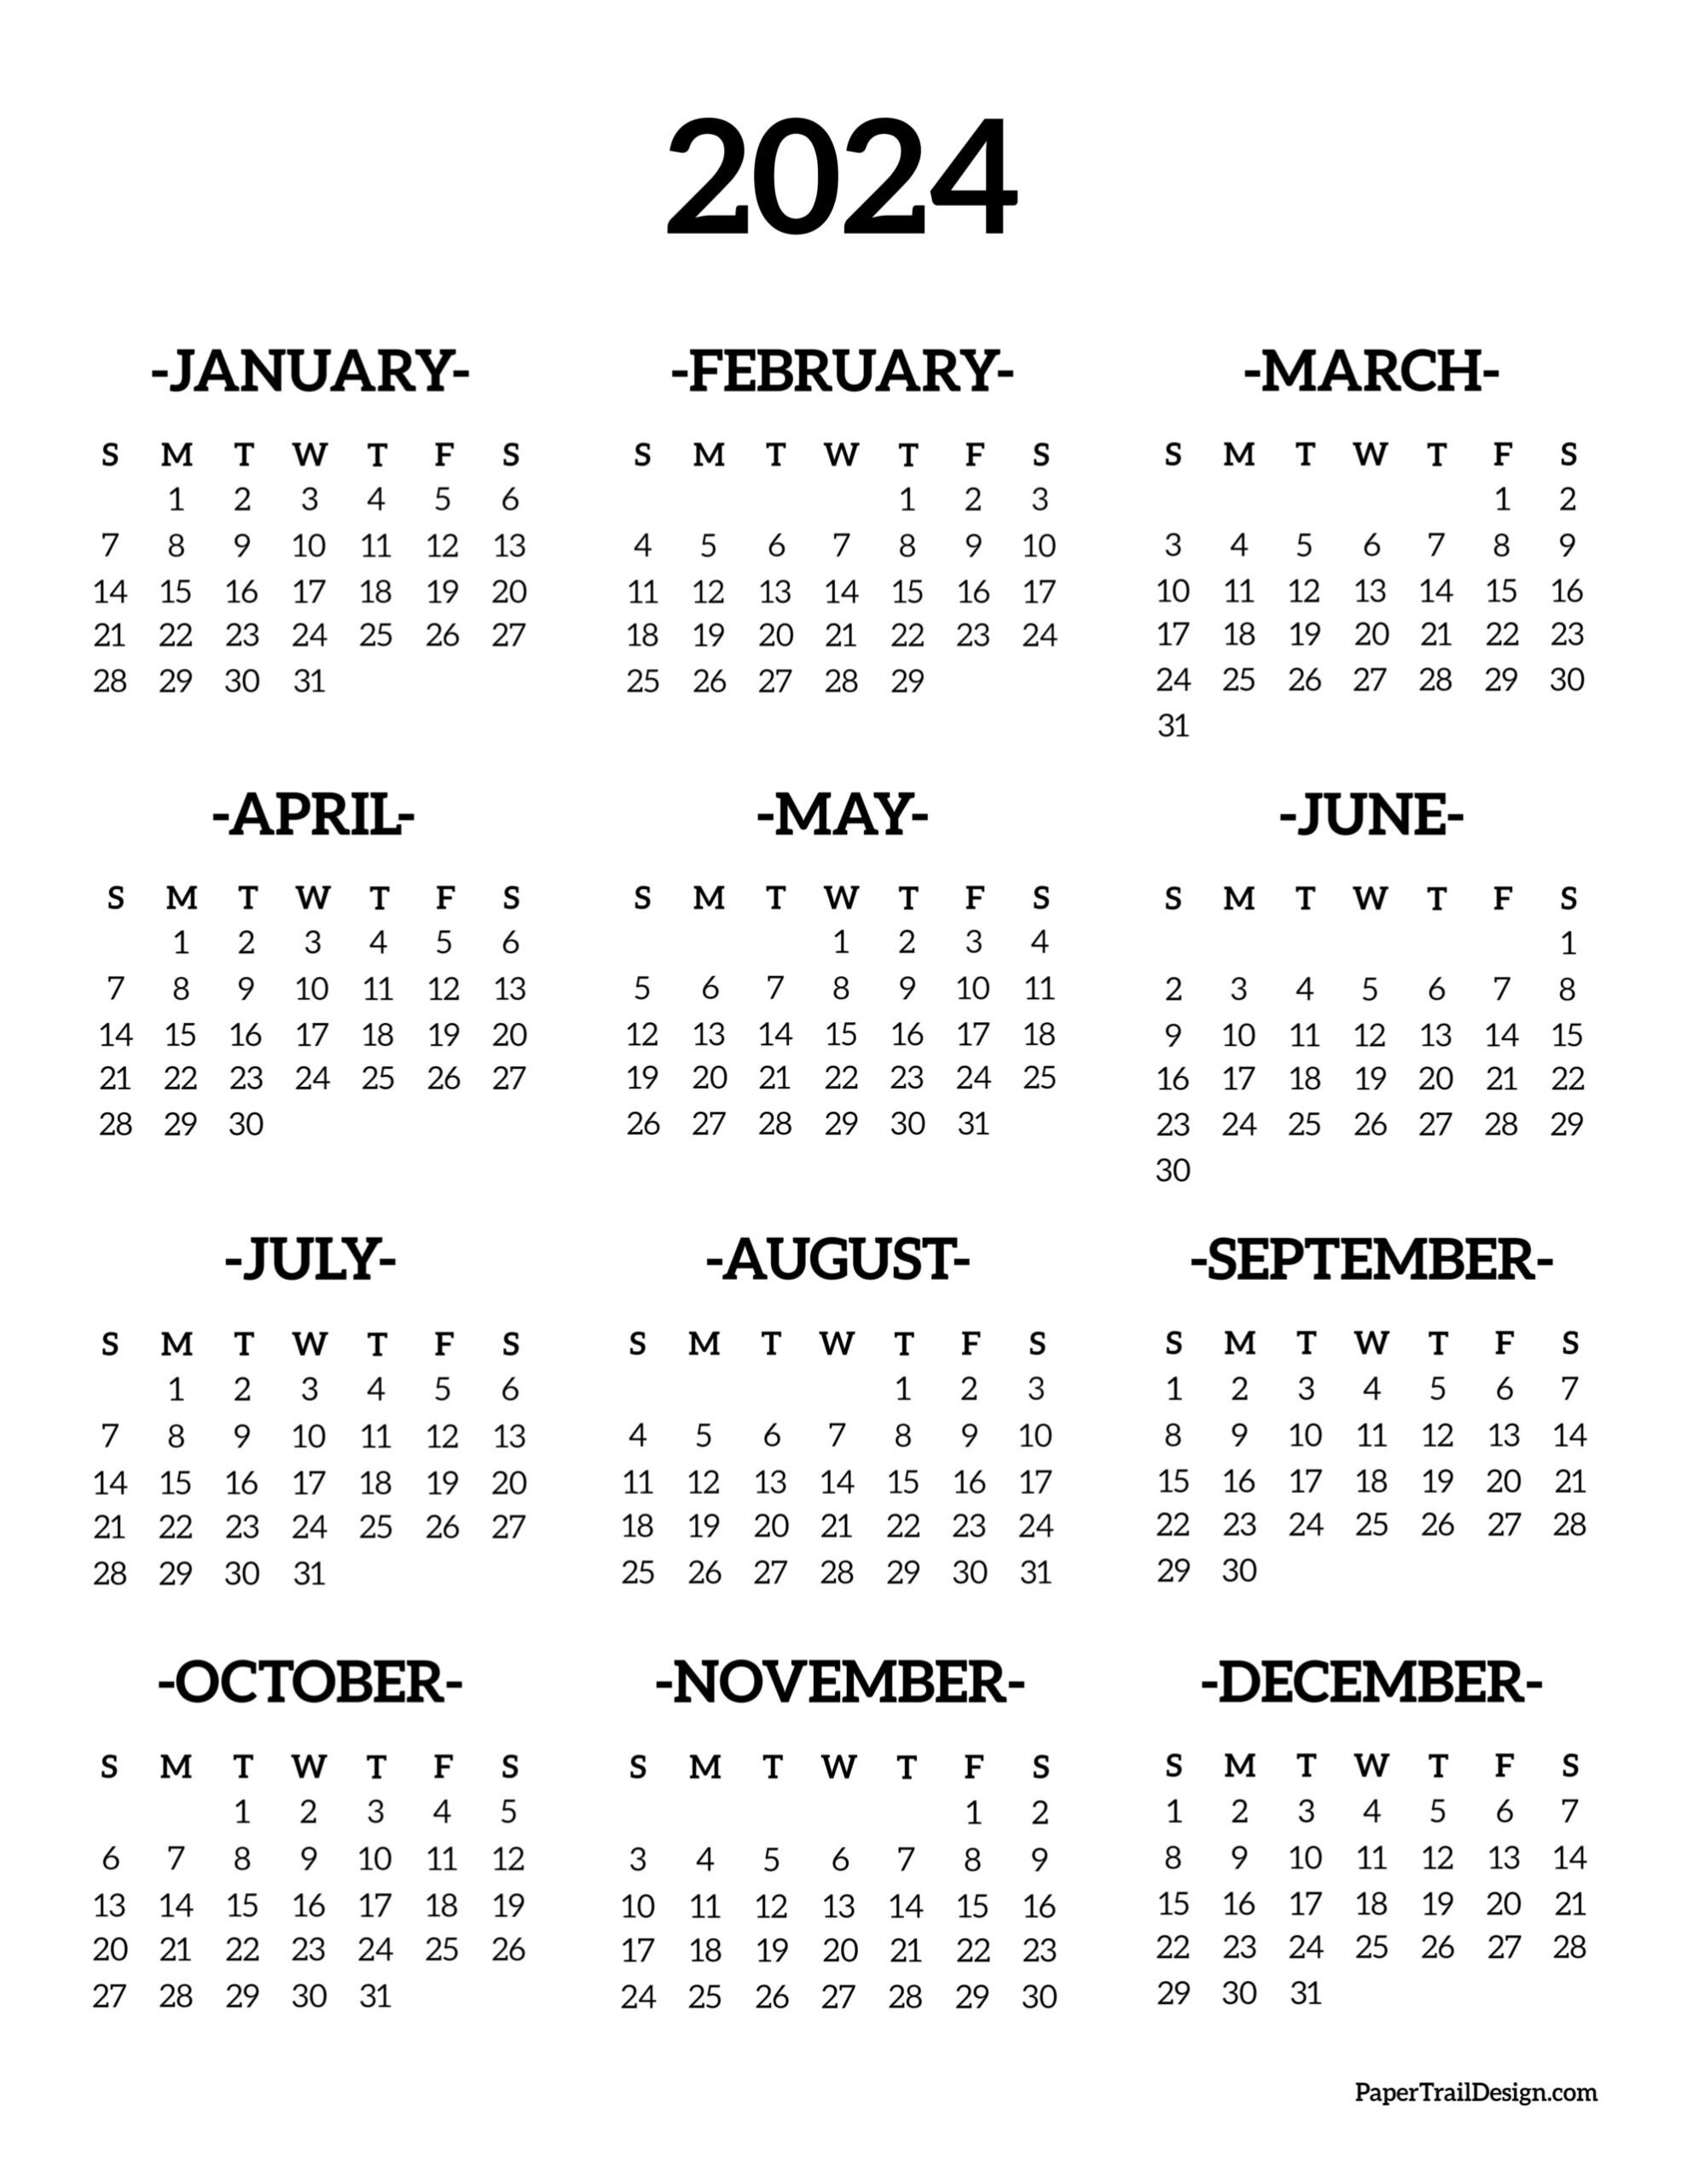 Calendar 2024 Printable One Page - Paper Trail Design inside Free Printable Black And White Calendar 2024